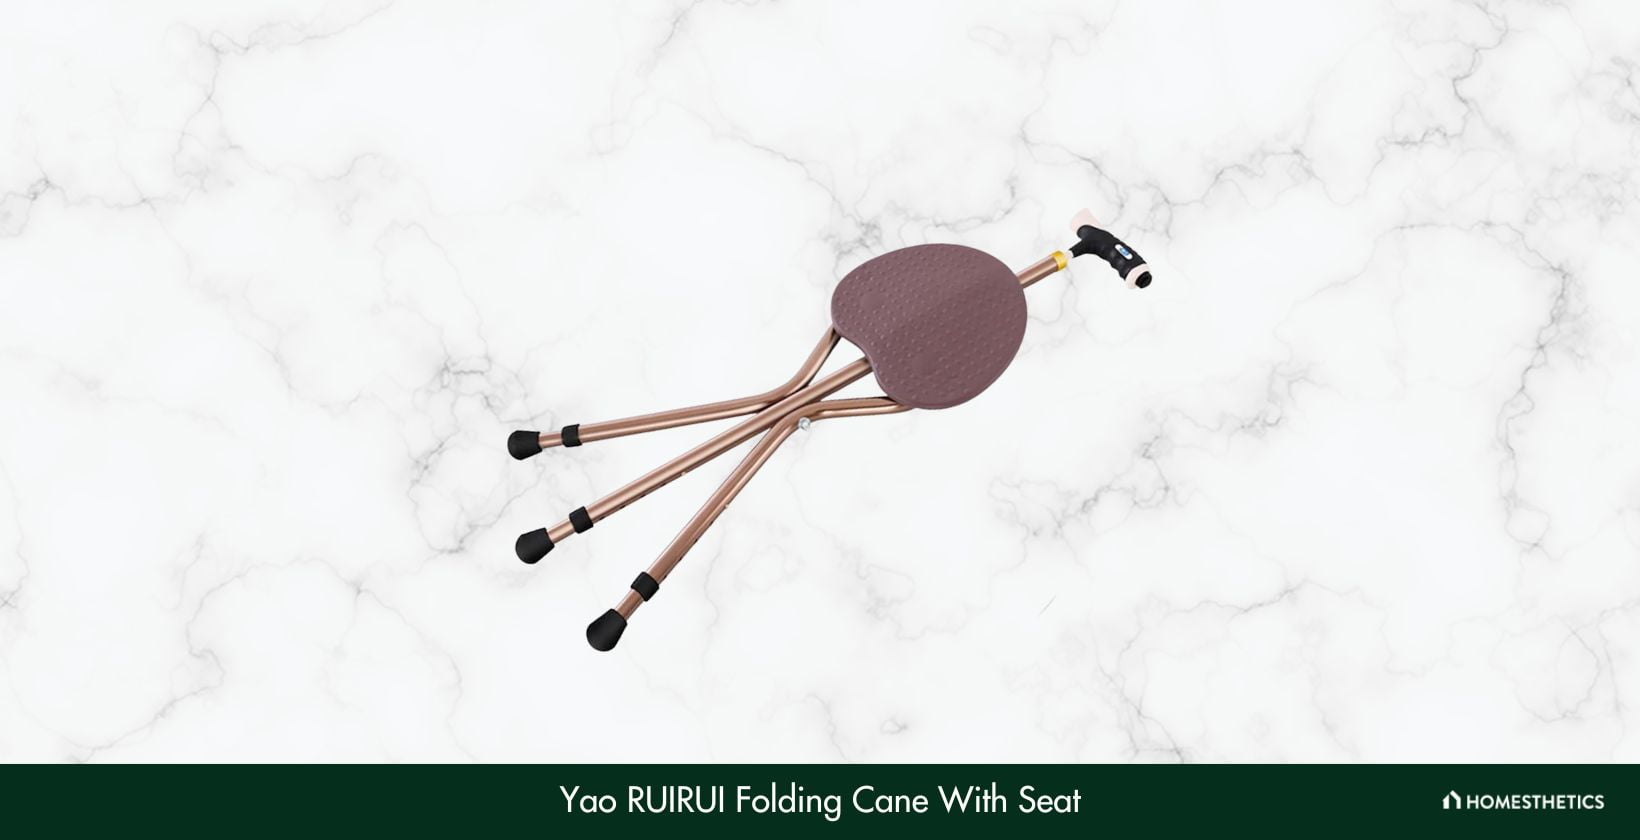 Yao RUIRUI Folding Cane With Seat